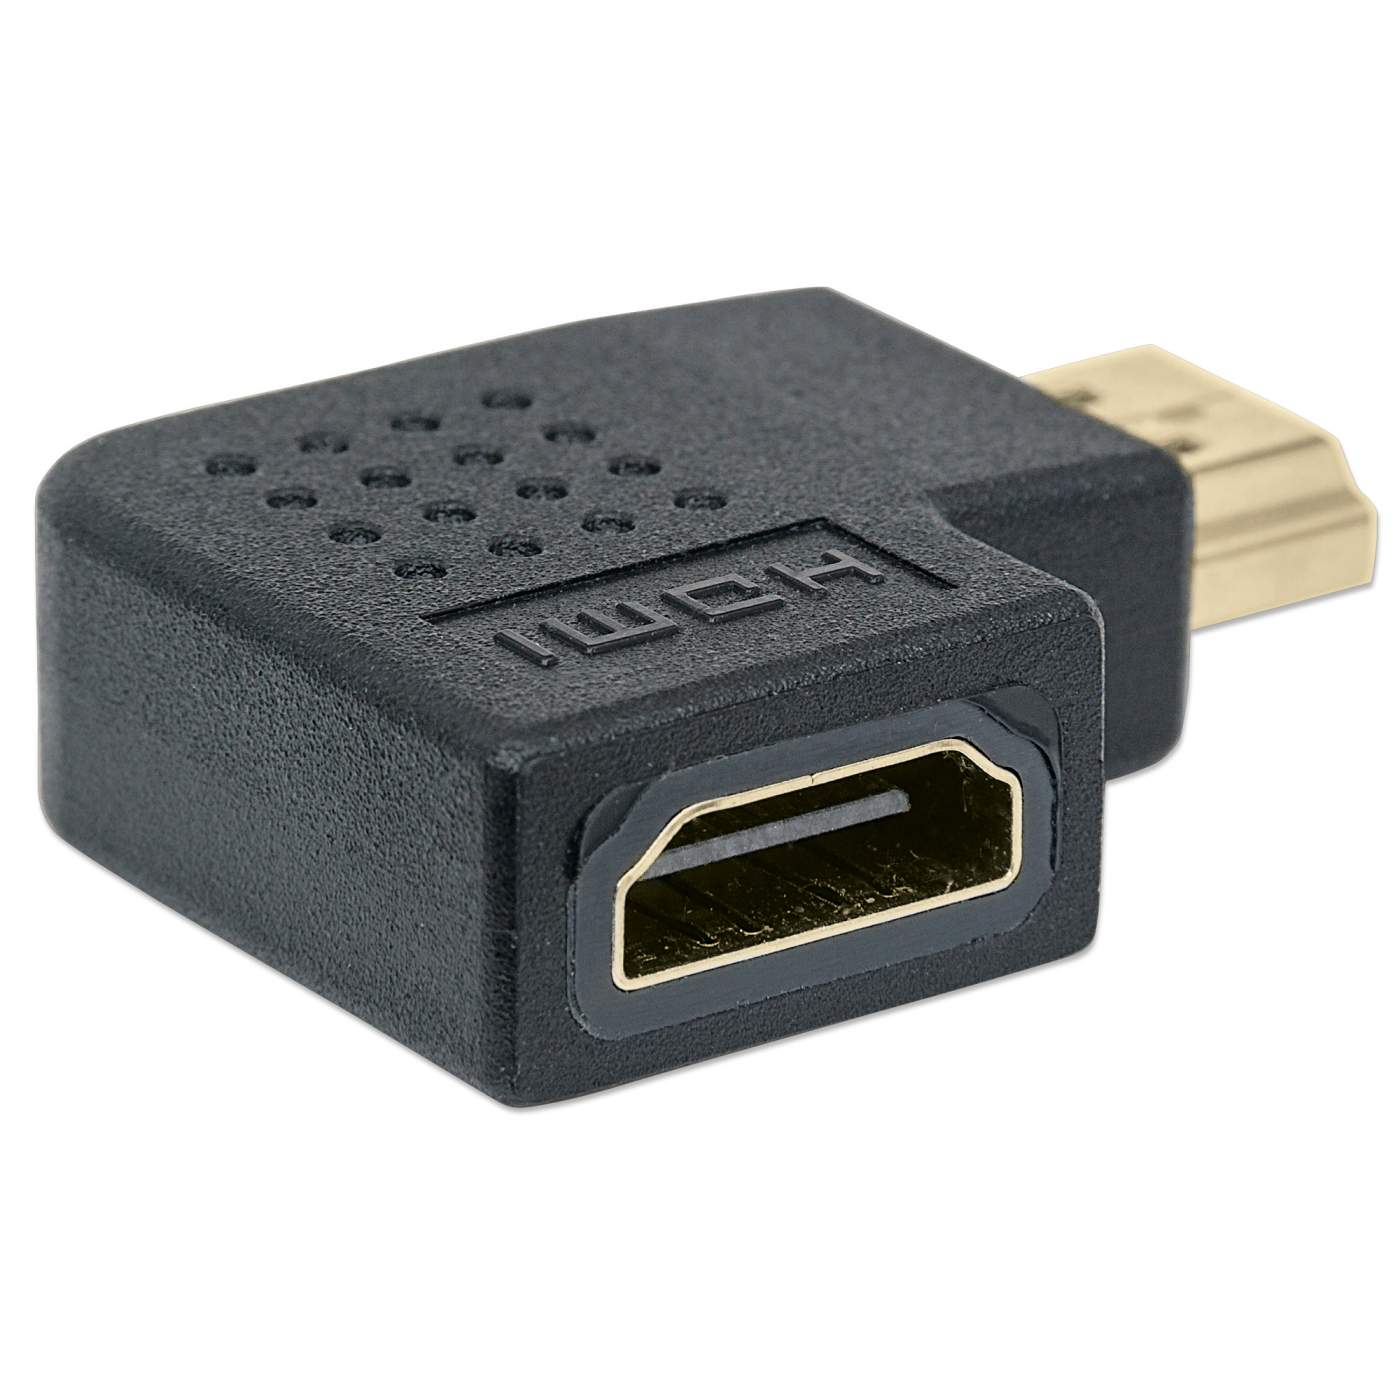 Manhattan HDMI to DVI-D Cable (354592)